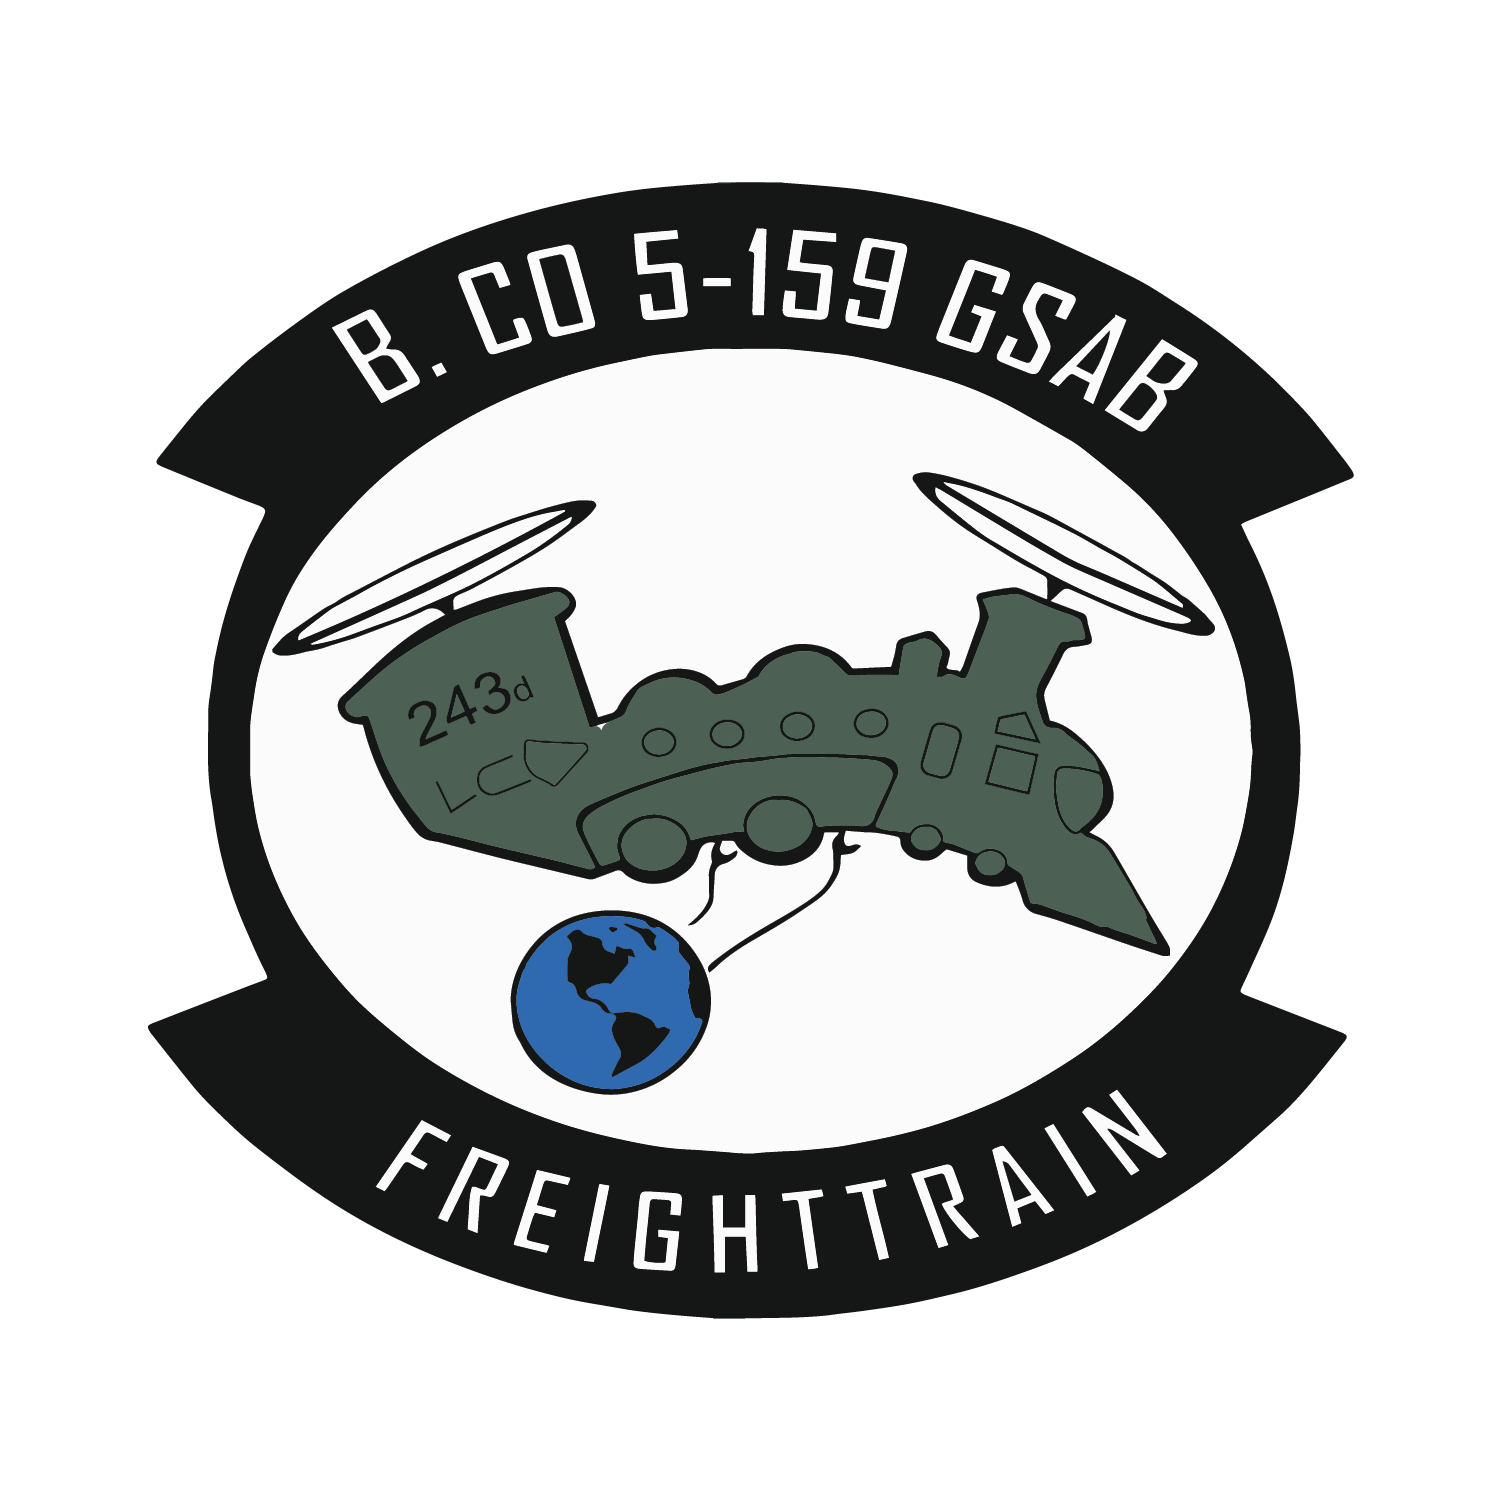 B Co, 5-159 GSAB "Freight Train"